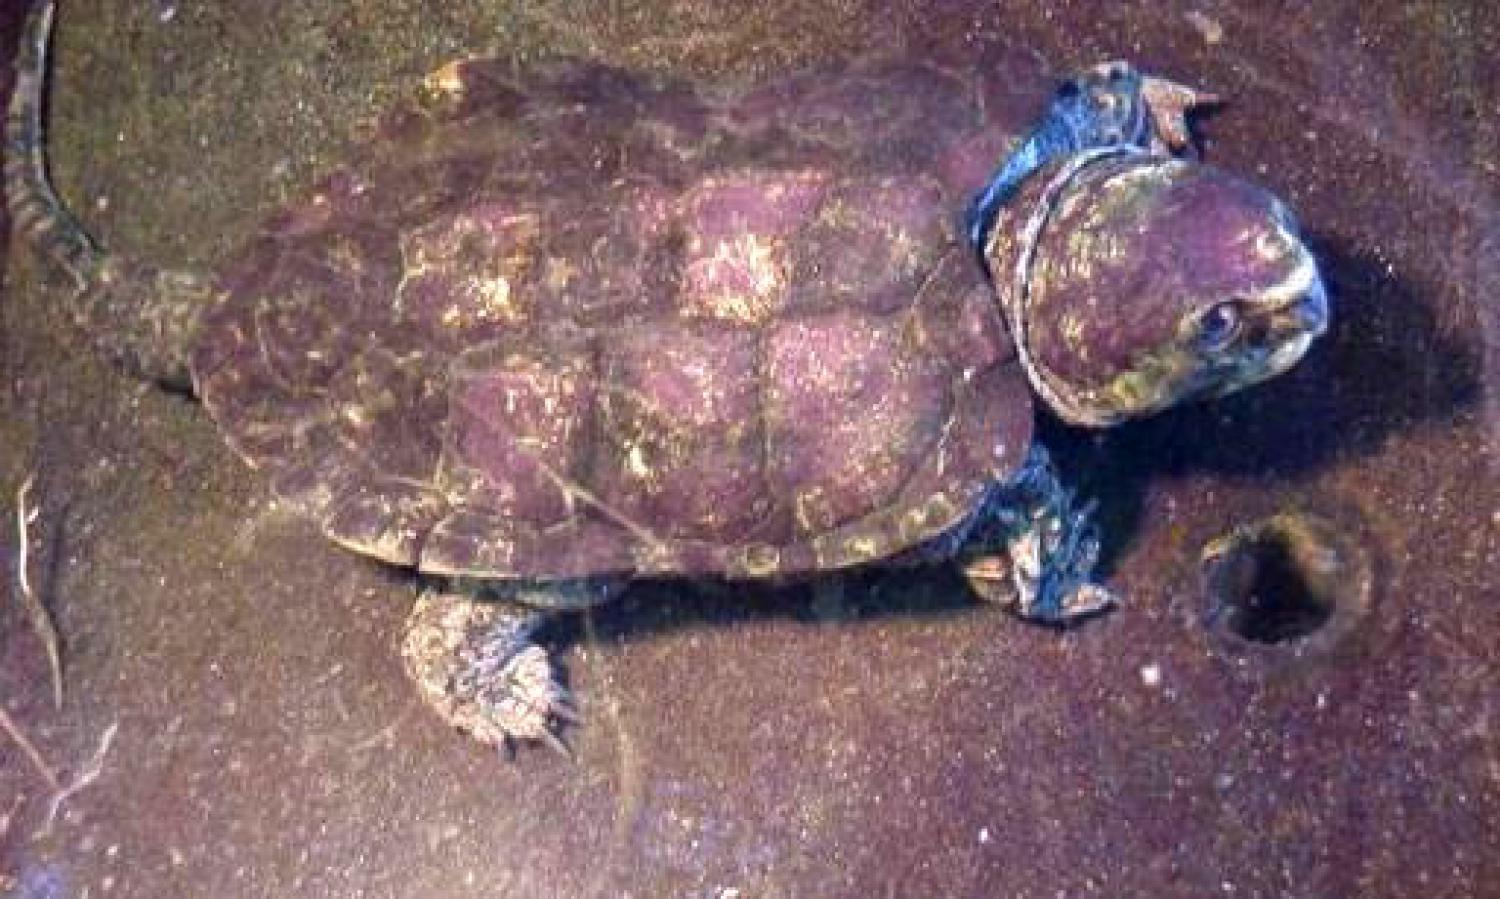 Big-headed turtle (Platysternon megacephalum)